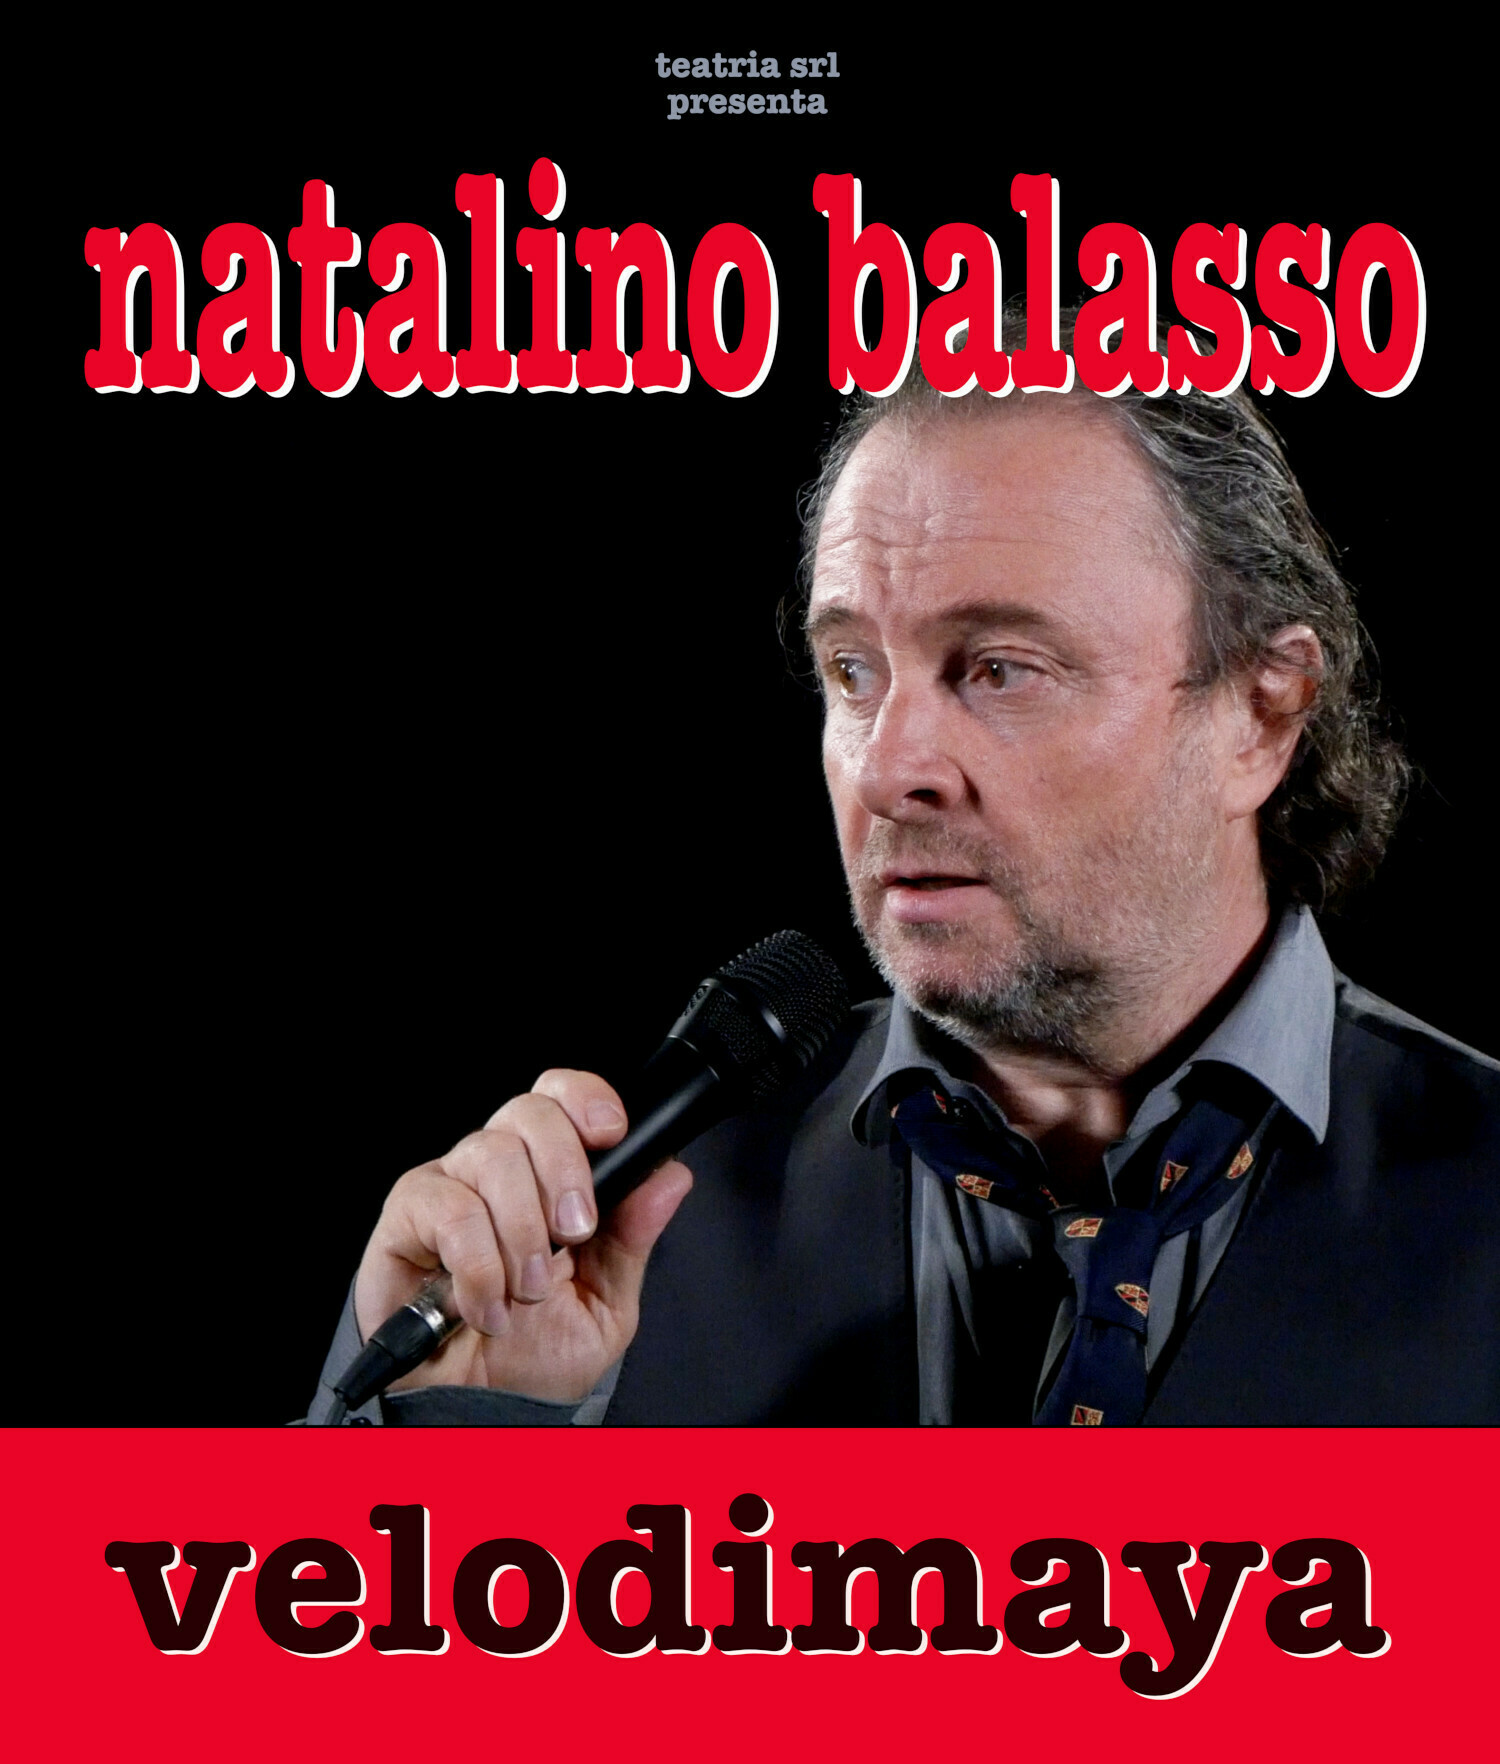 DATA ANNULLATA NATALINO  BALASSO in Velodimaya: rimborso dei biglietti